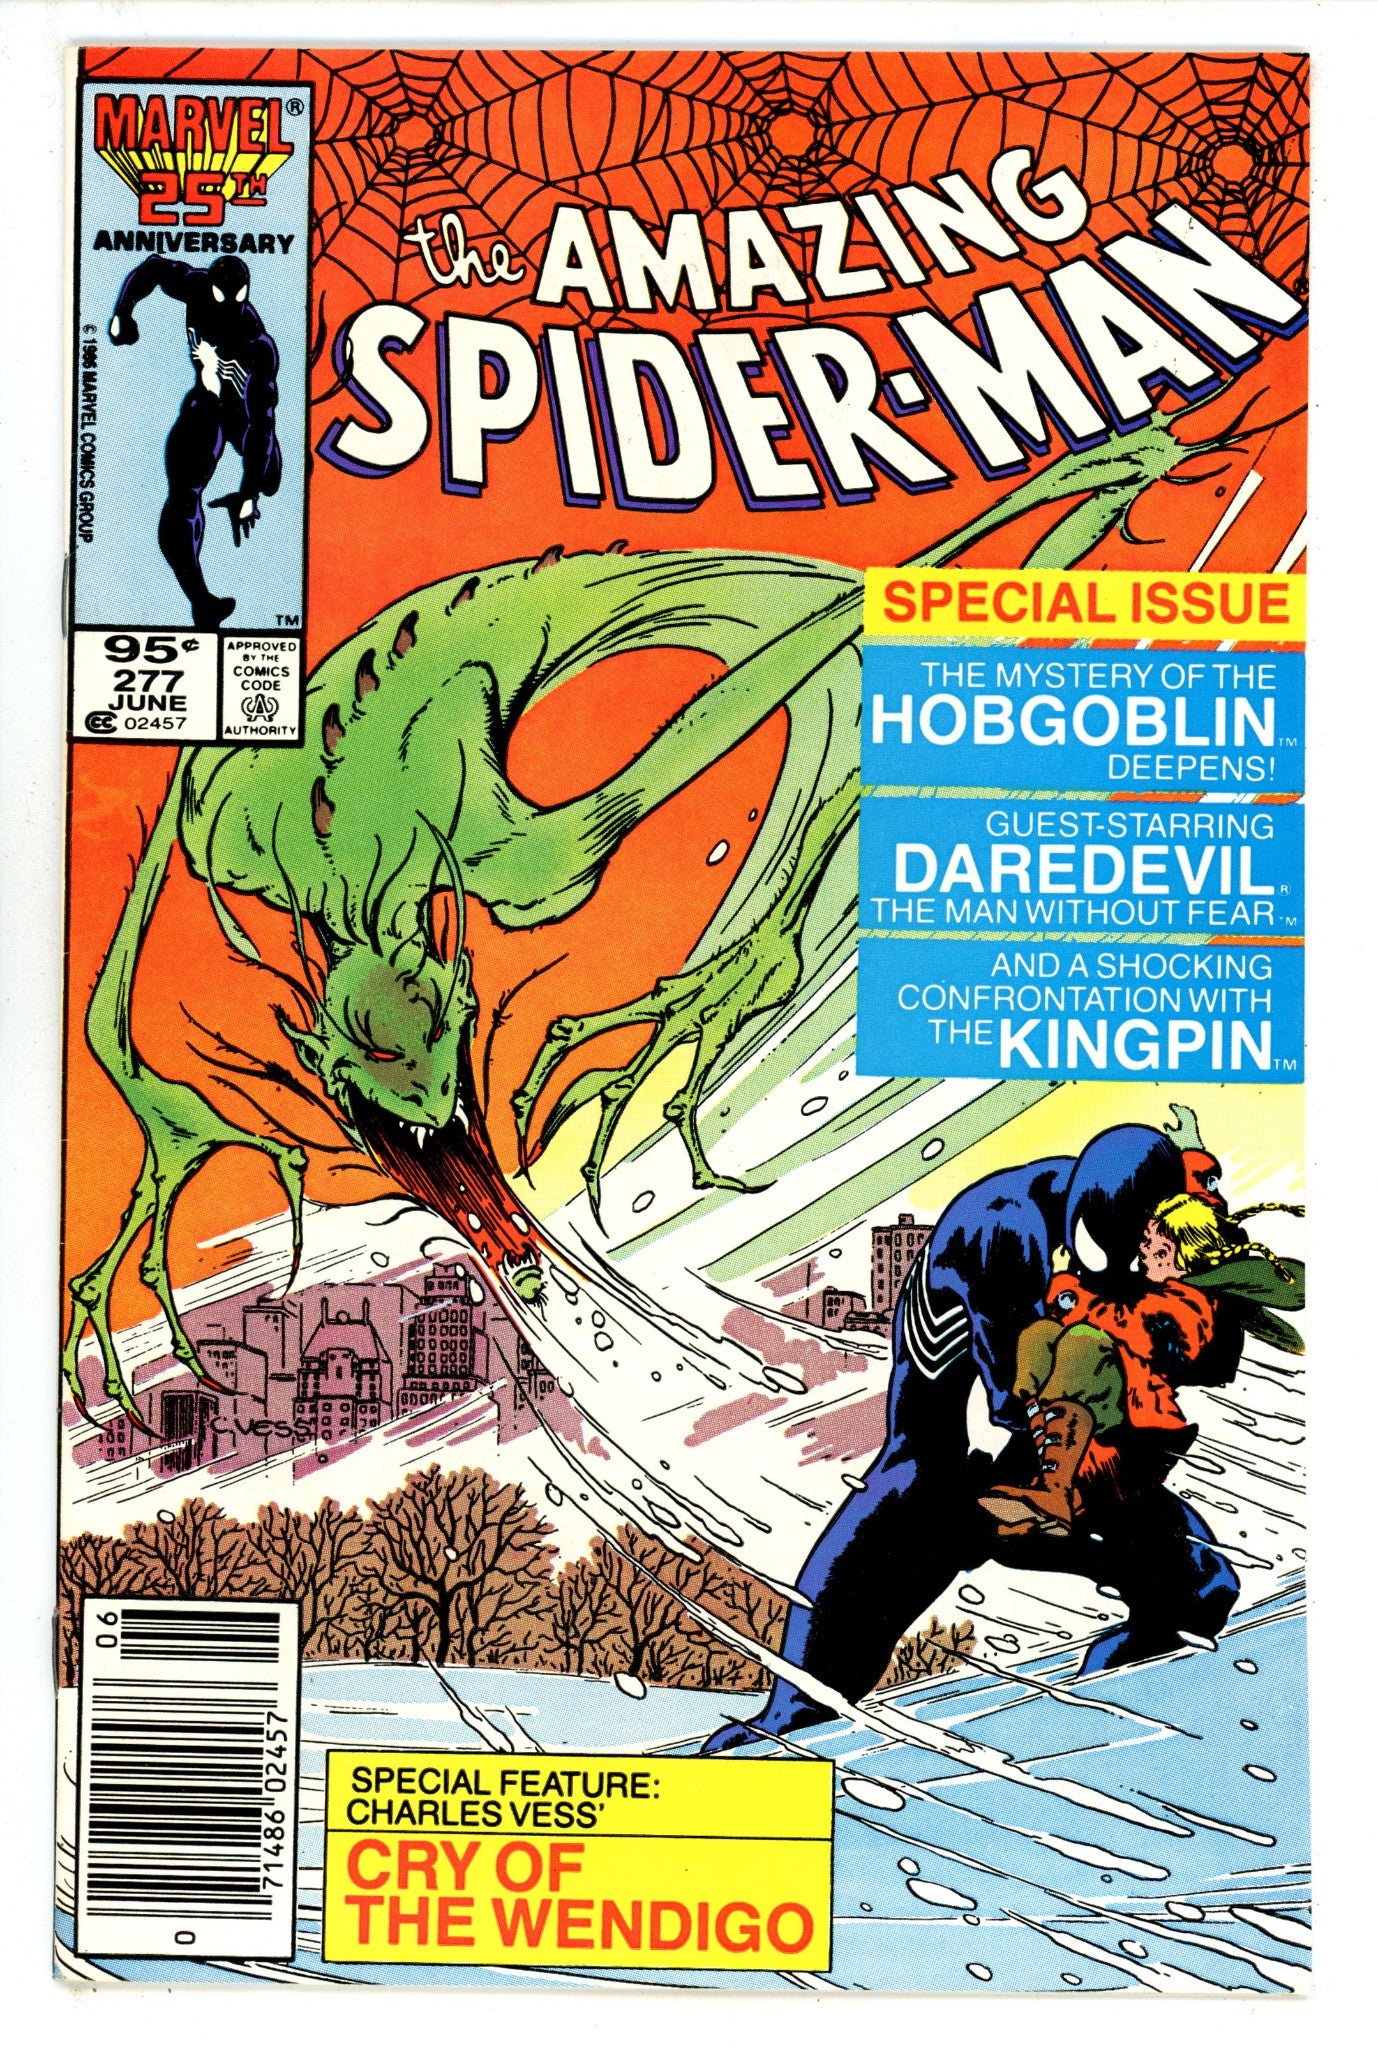 The Amazing Spider-Man Vol 1 321 VF/NM (9.0) Miscut (1989) 